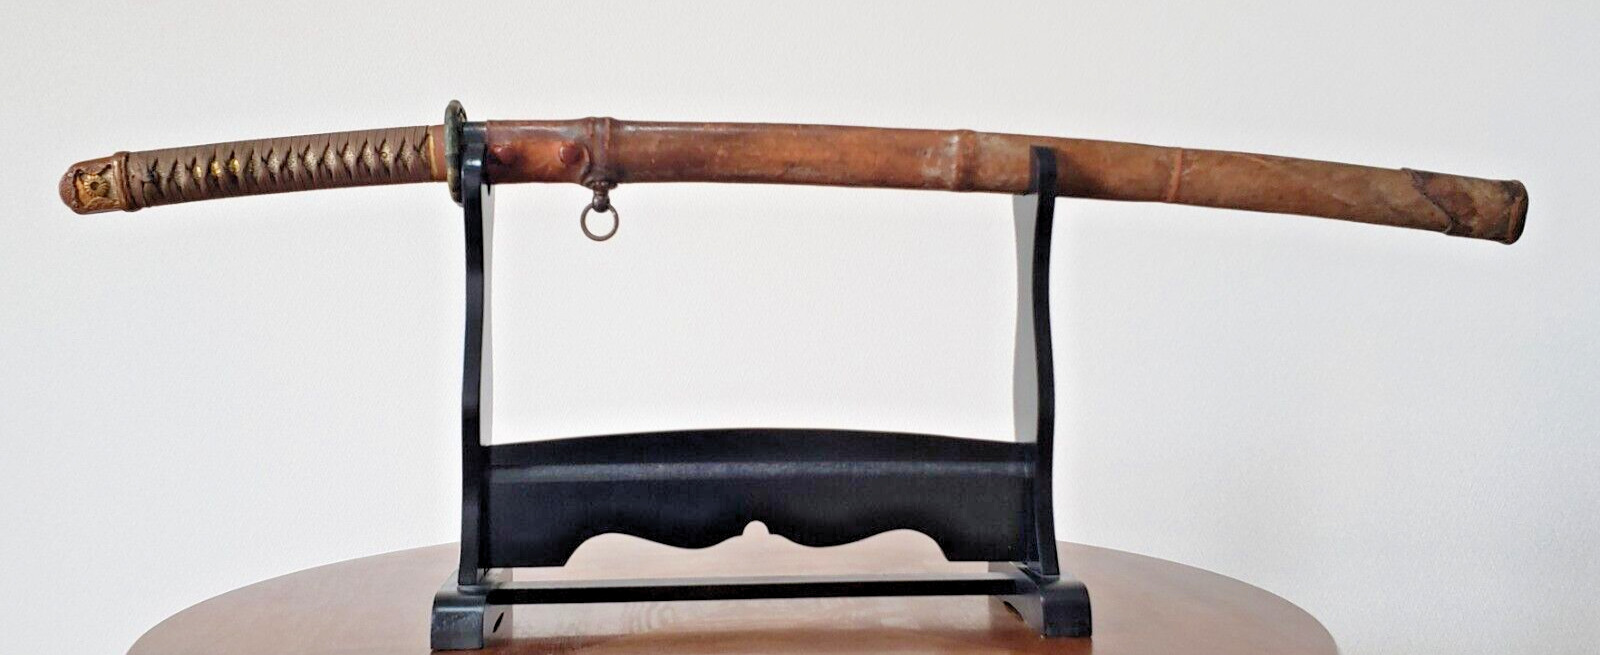 Japan antique World War II Japanese Samurai Sword Leather Sheath 軍刀 gunto katana